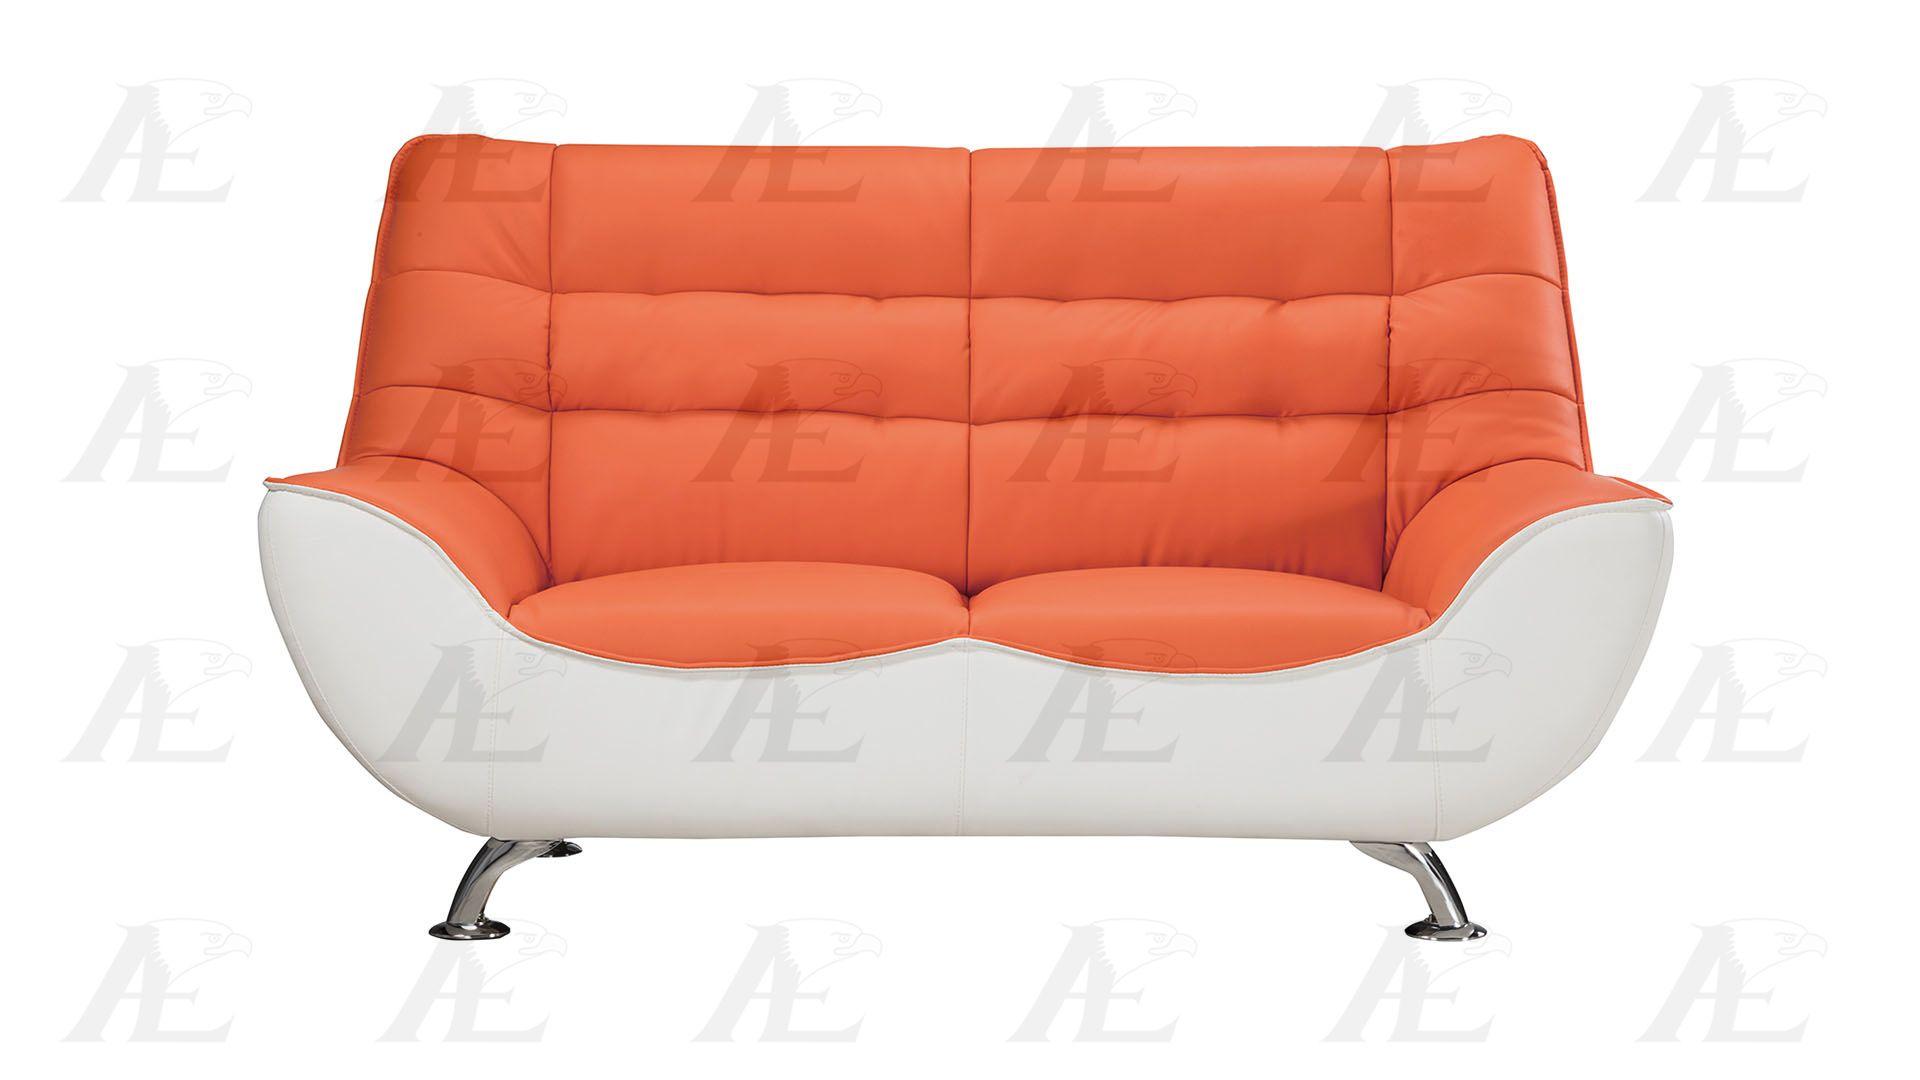 

                    
American Eagle Furniture AE612-ORG.W Sofa and Loveseat Set Orange/White Bonded Leather Purchase 
